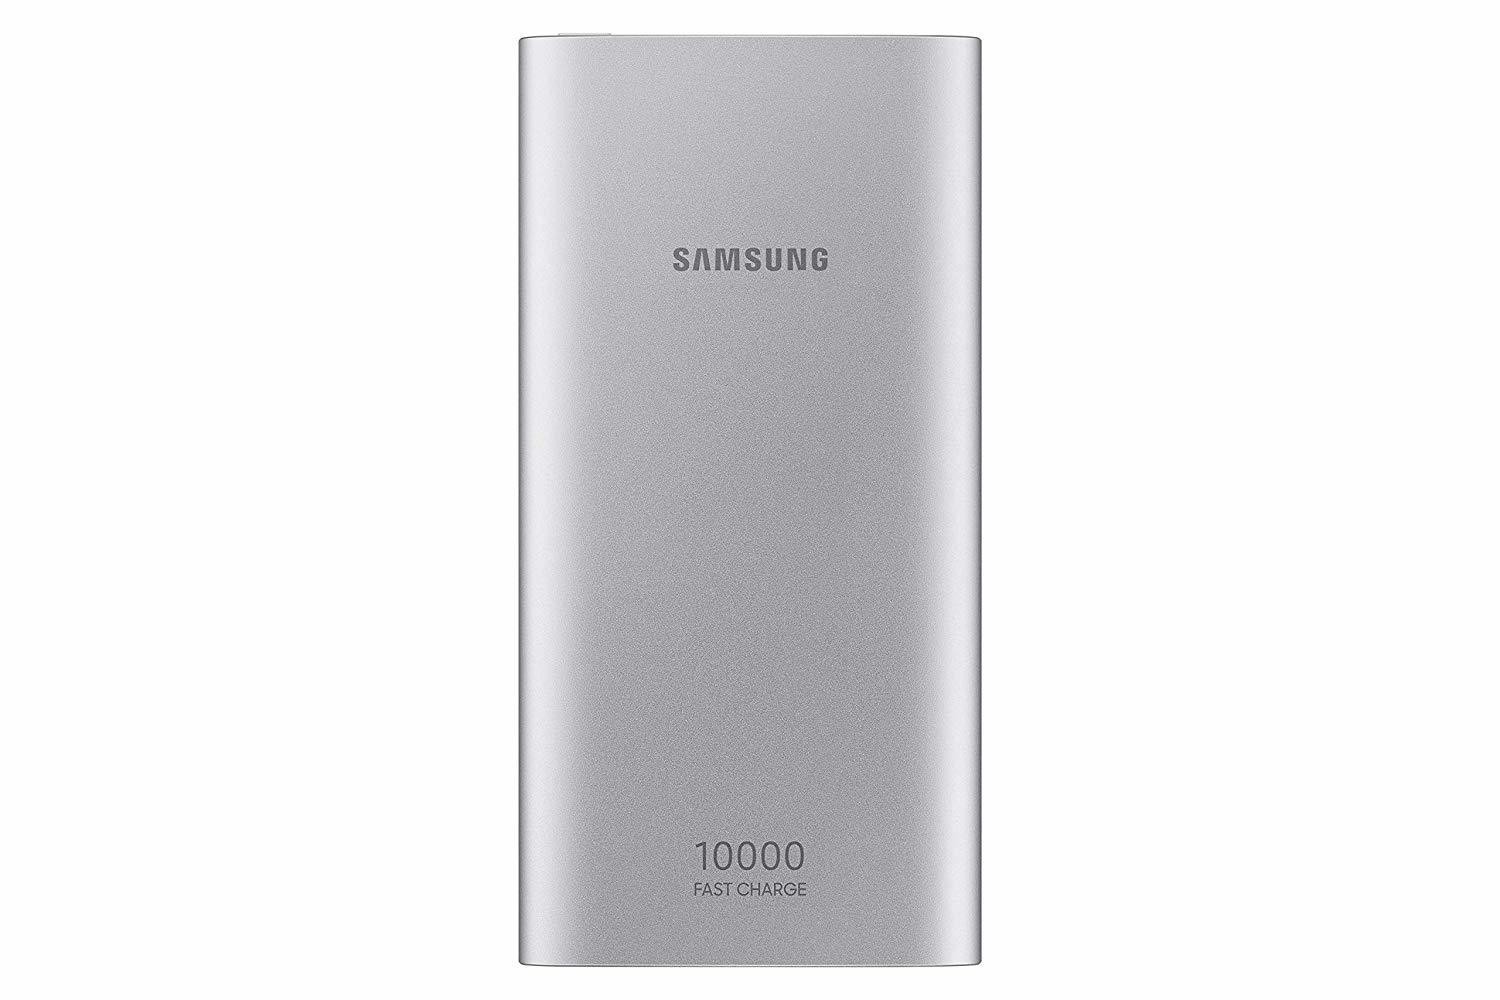 Samsung 15W Fast Charging Battery Pack 10,000 mAh (Type C) - Silver Powerbank